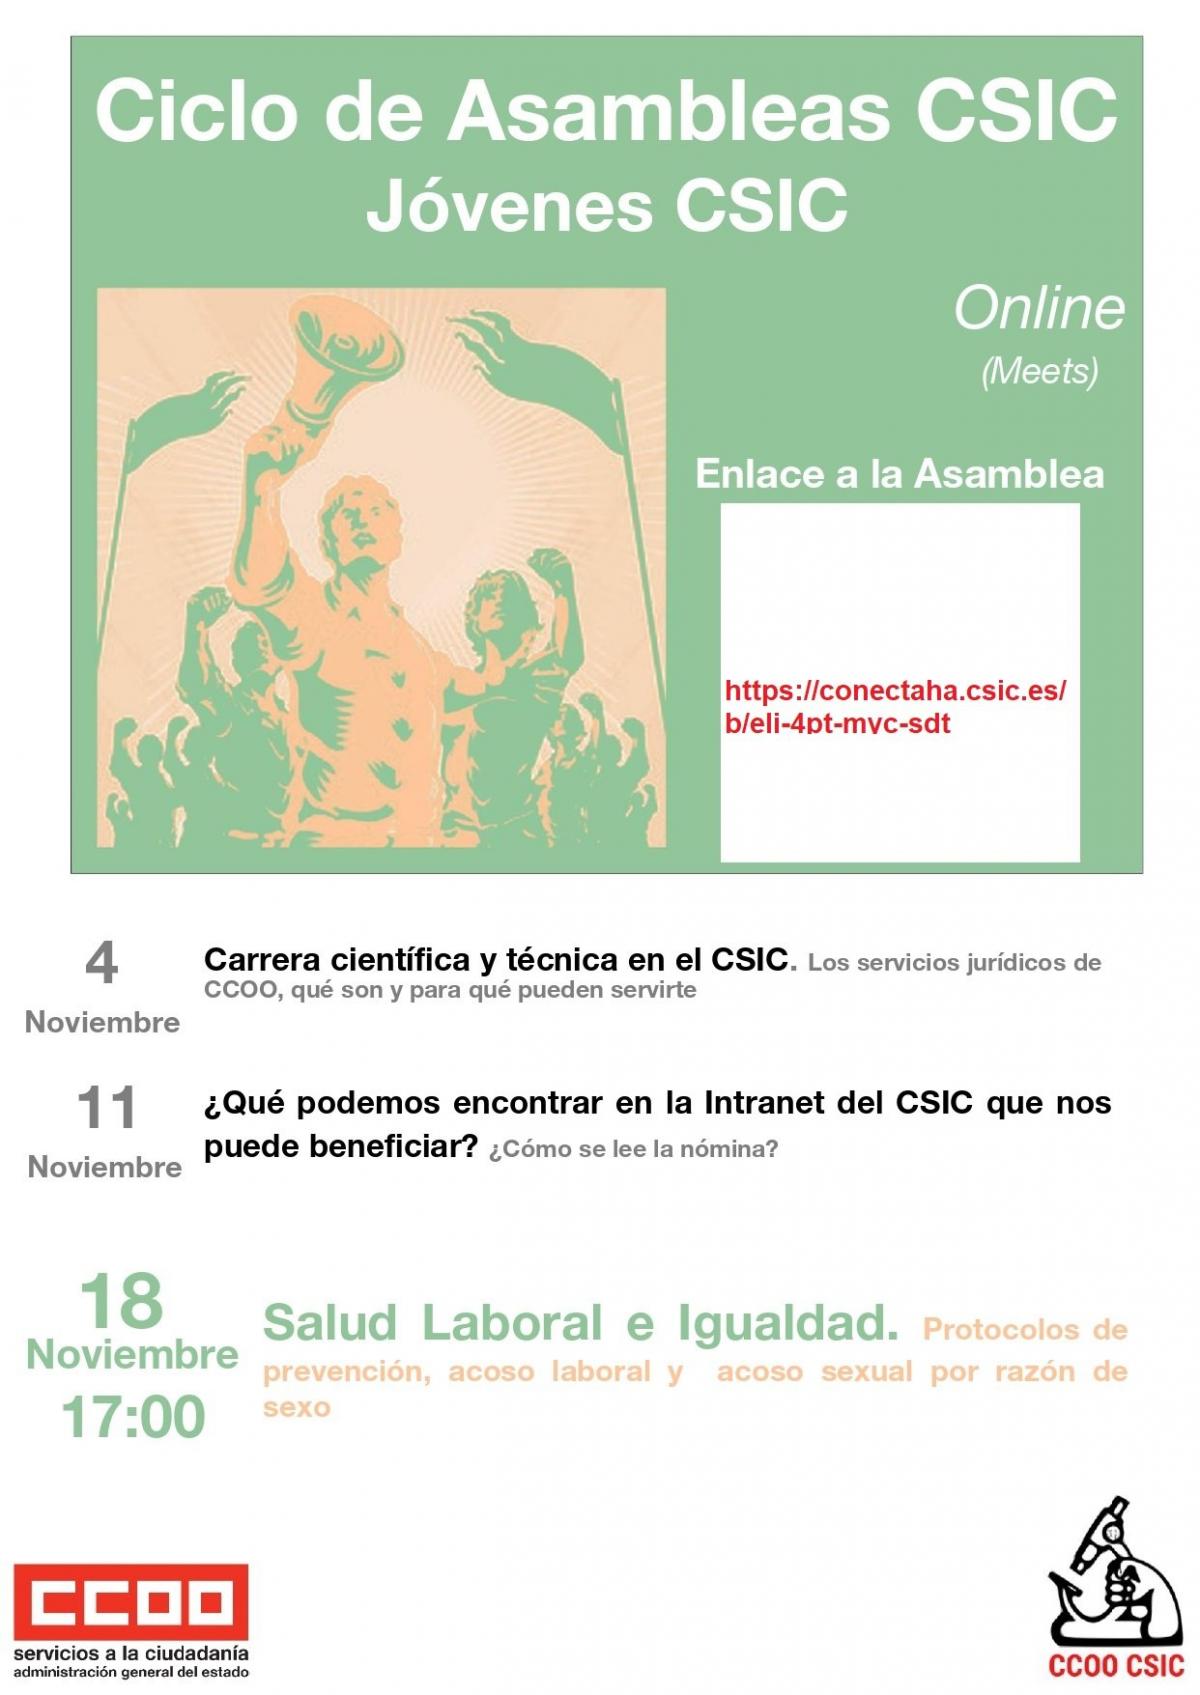 Ciclo de Asambleas en el CSIC.